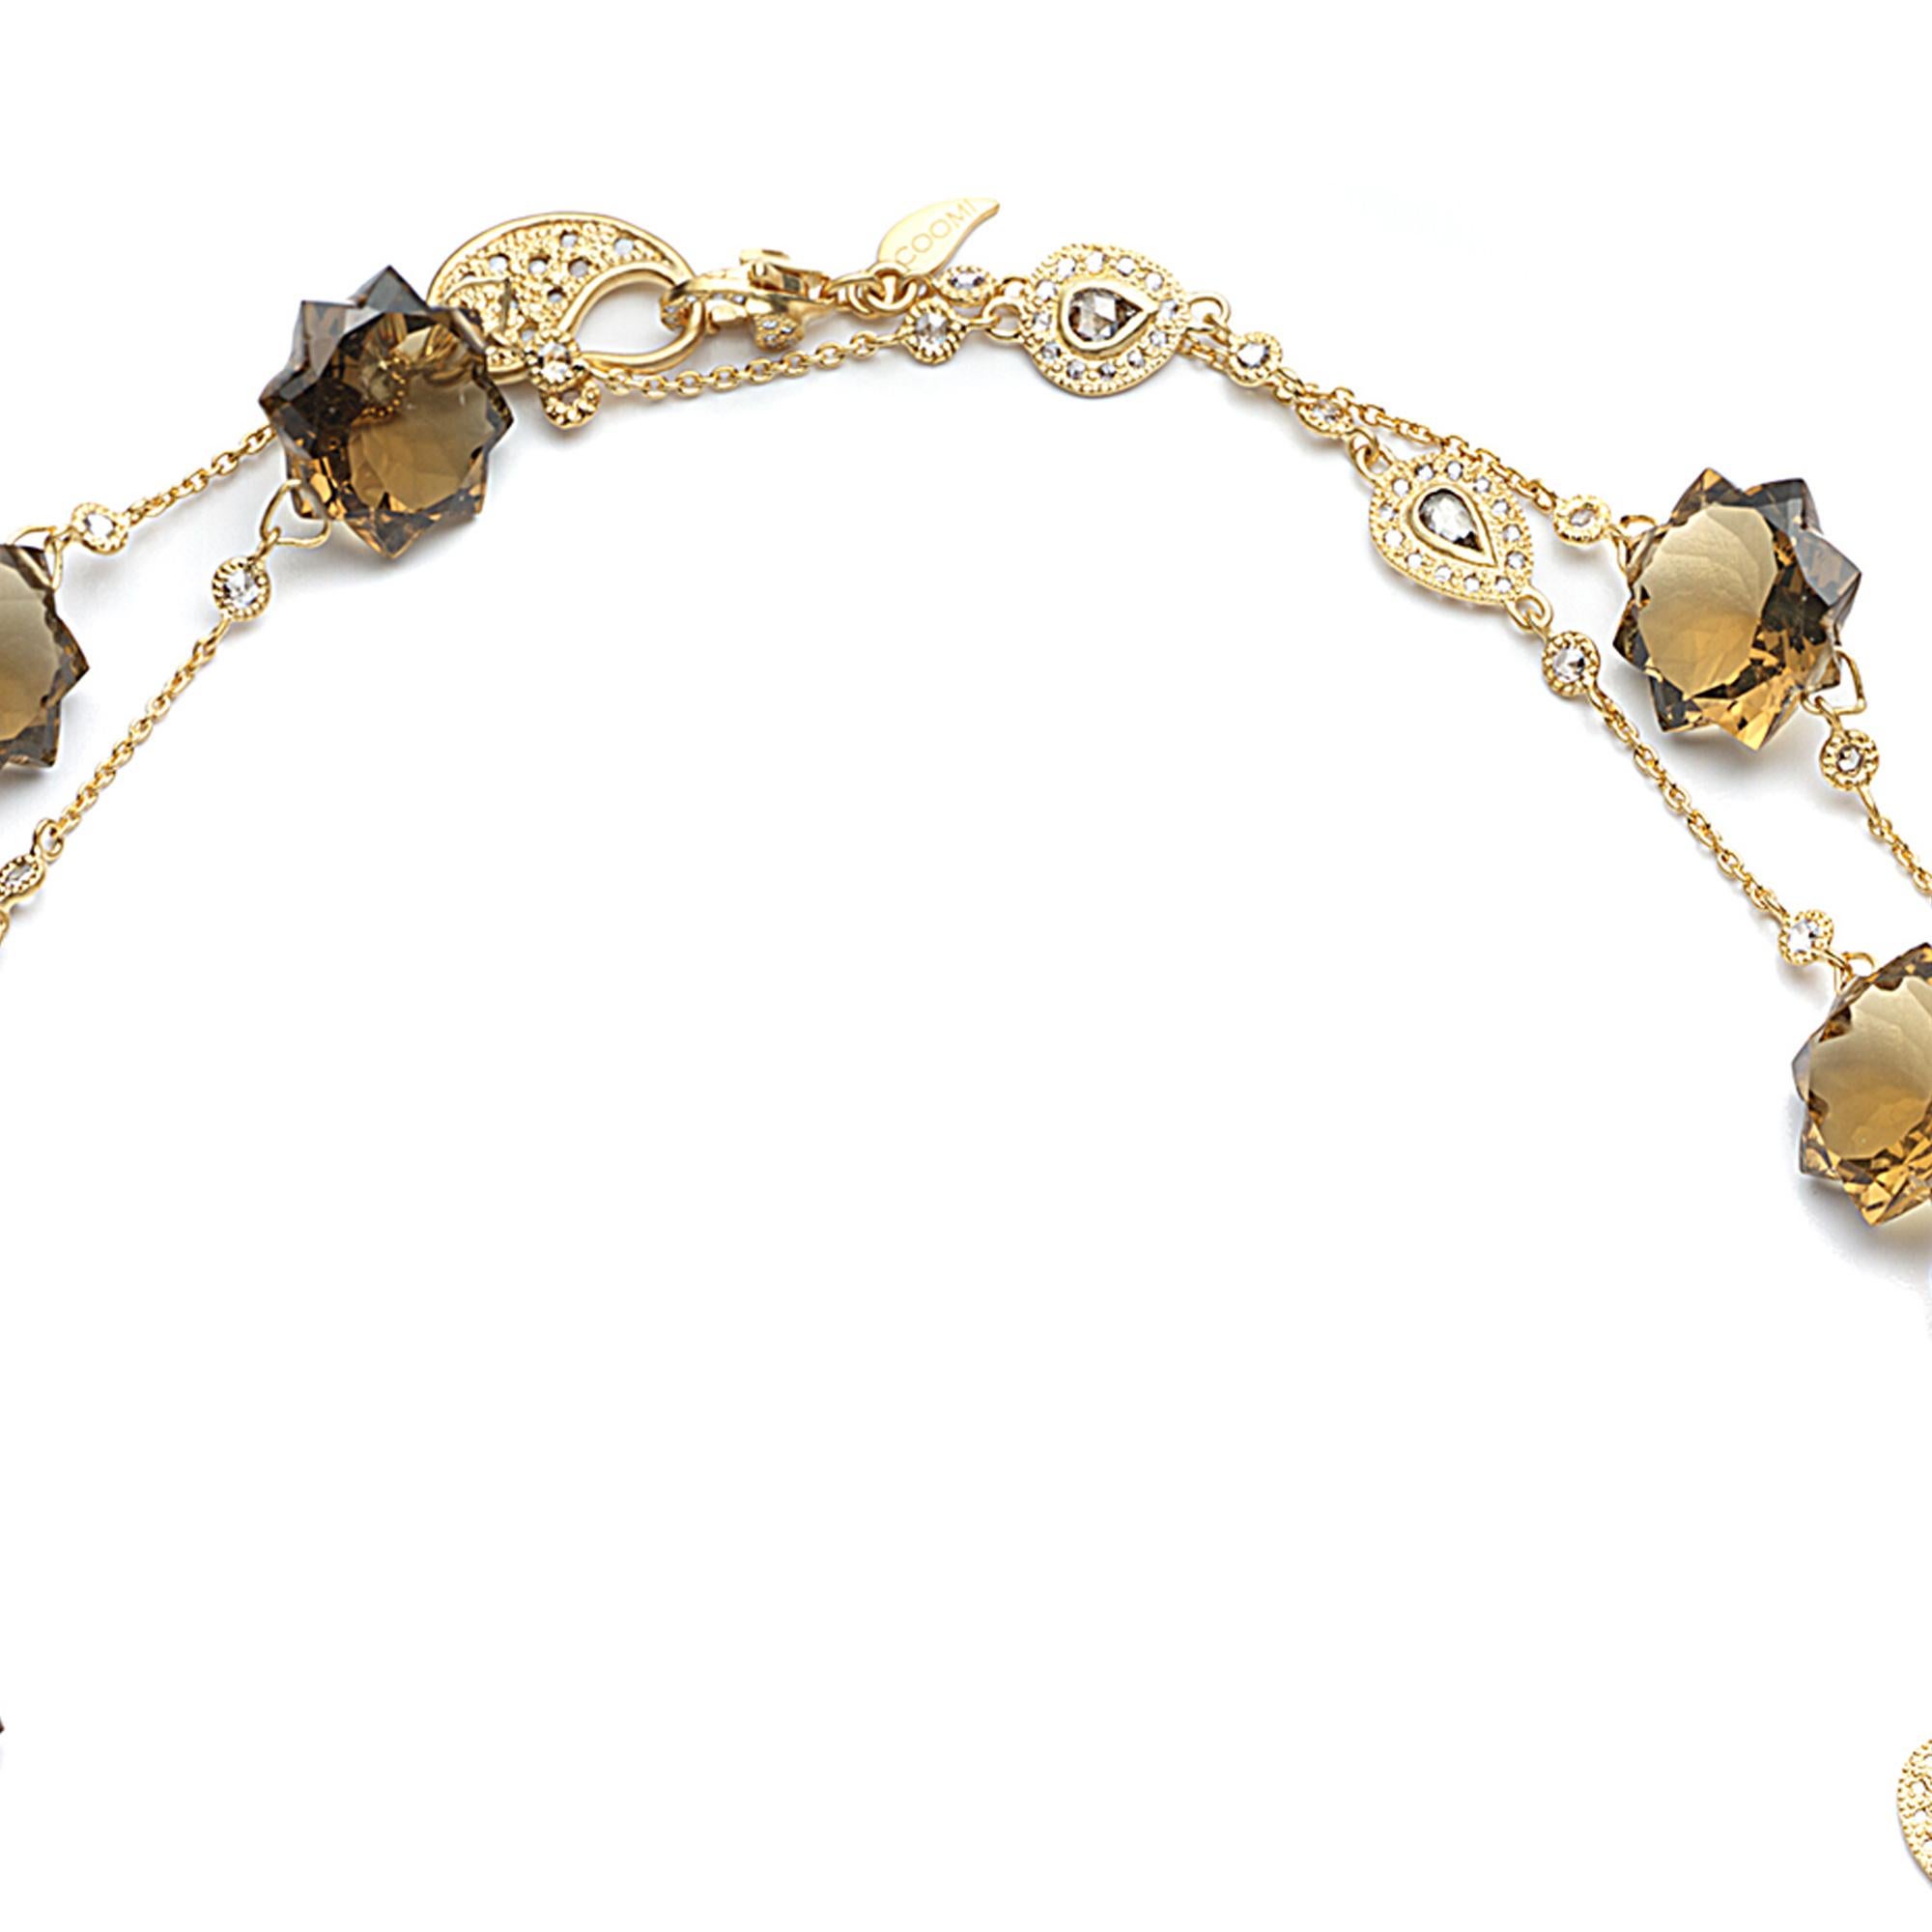 Sagrada Kaleidoscope Necklace Set in 20 karat Yellow Gold with 88.90-carat Cognac Quartz and 4.87-carat Diamonds. This necklace contains 11 starburst-style carved cognac quartz and it is part of COOMI's Sagrada Kaleidoscope Collection. 